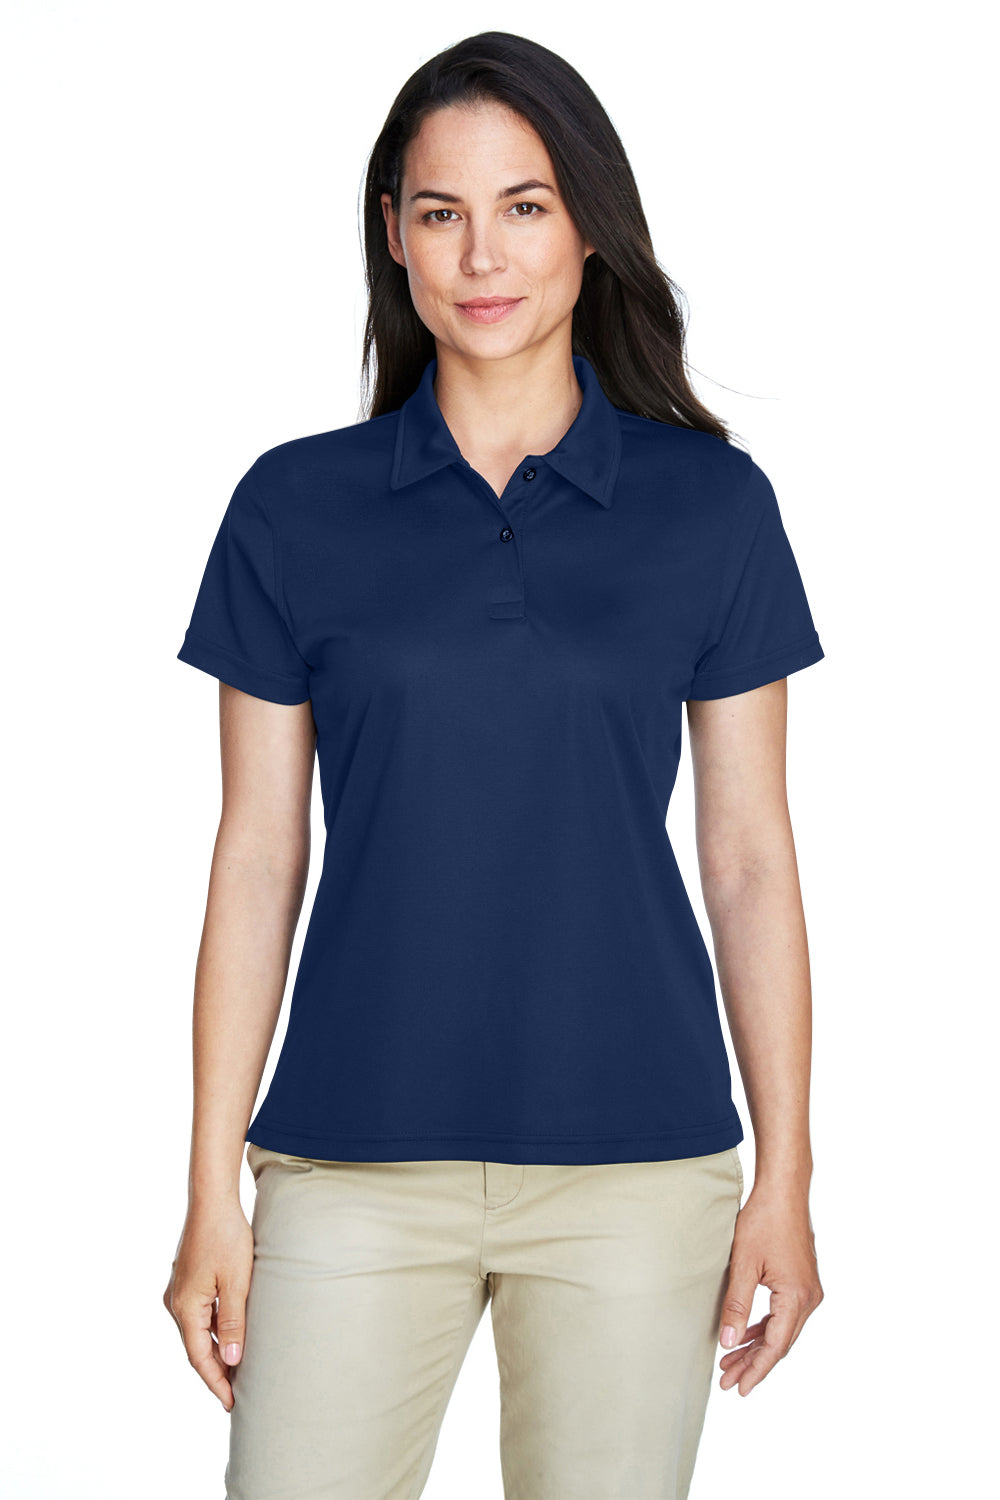 Team 365 TT21W Womens Command Performance Moisture Wicking Short Sleeve Polo Shirt Navy Blue Front